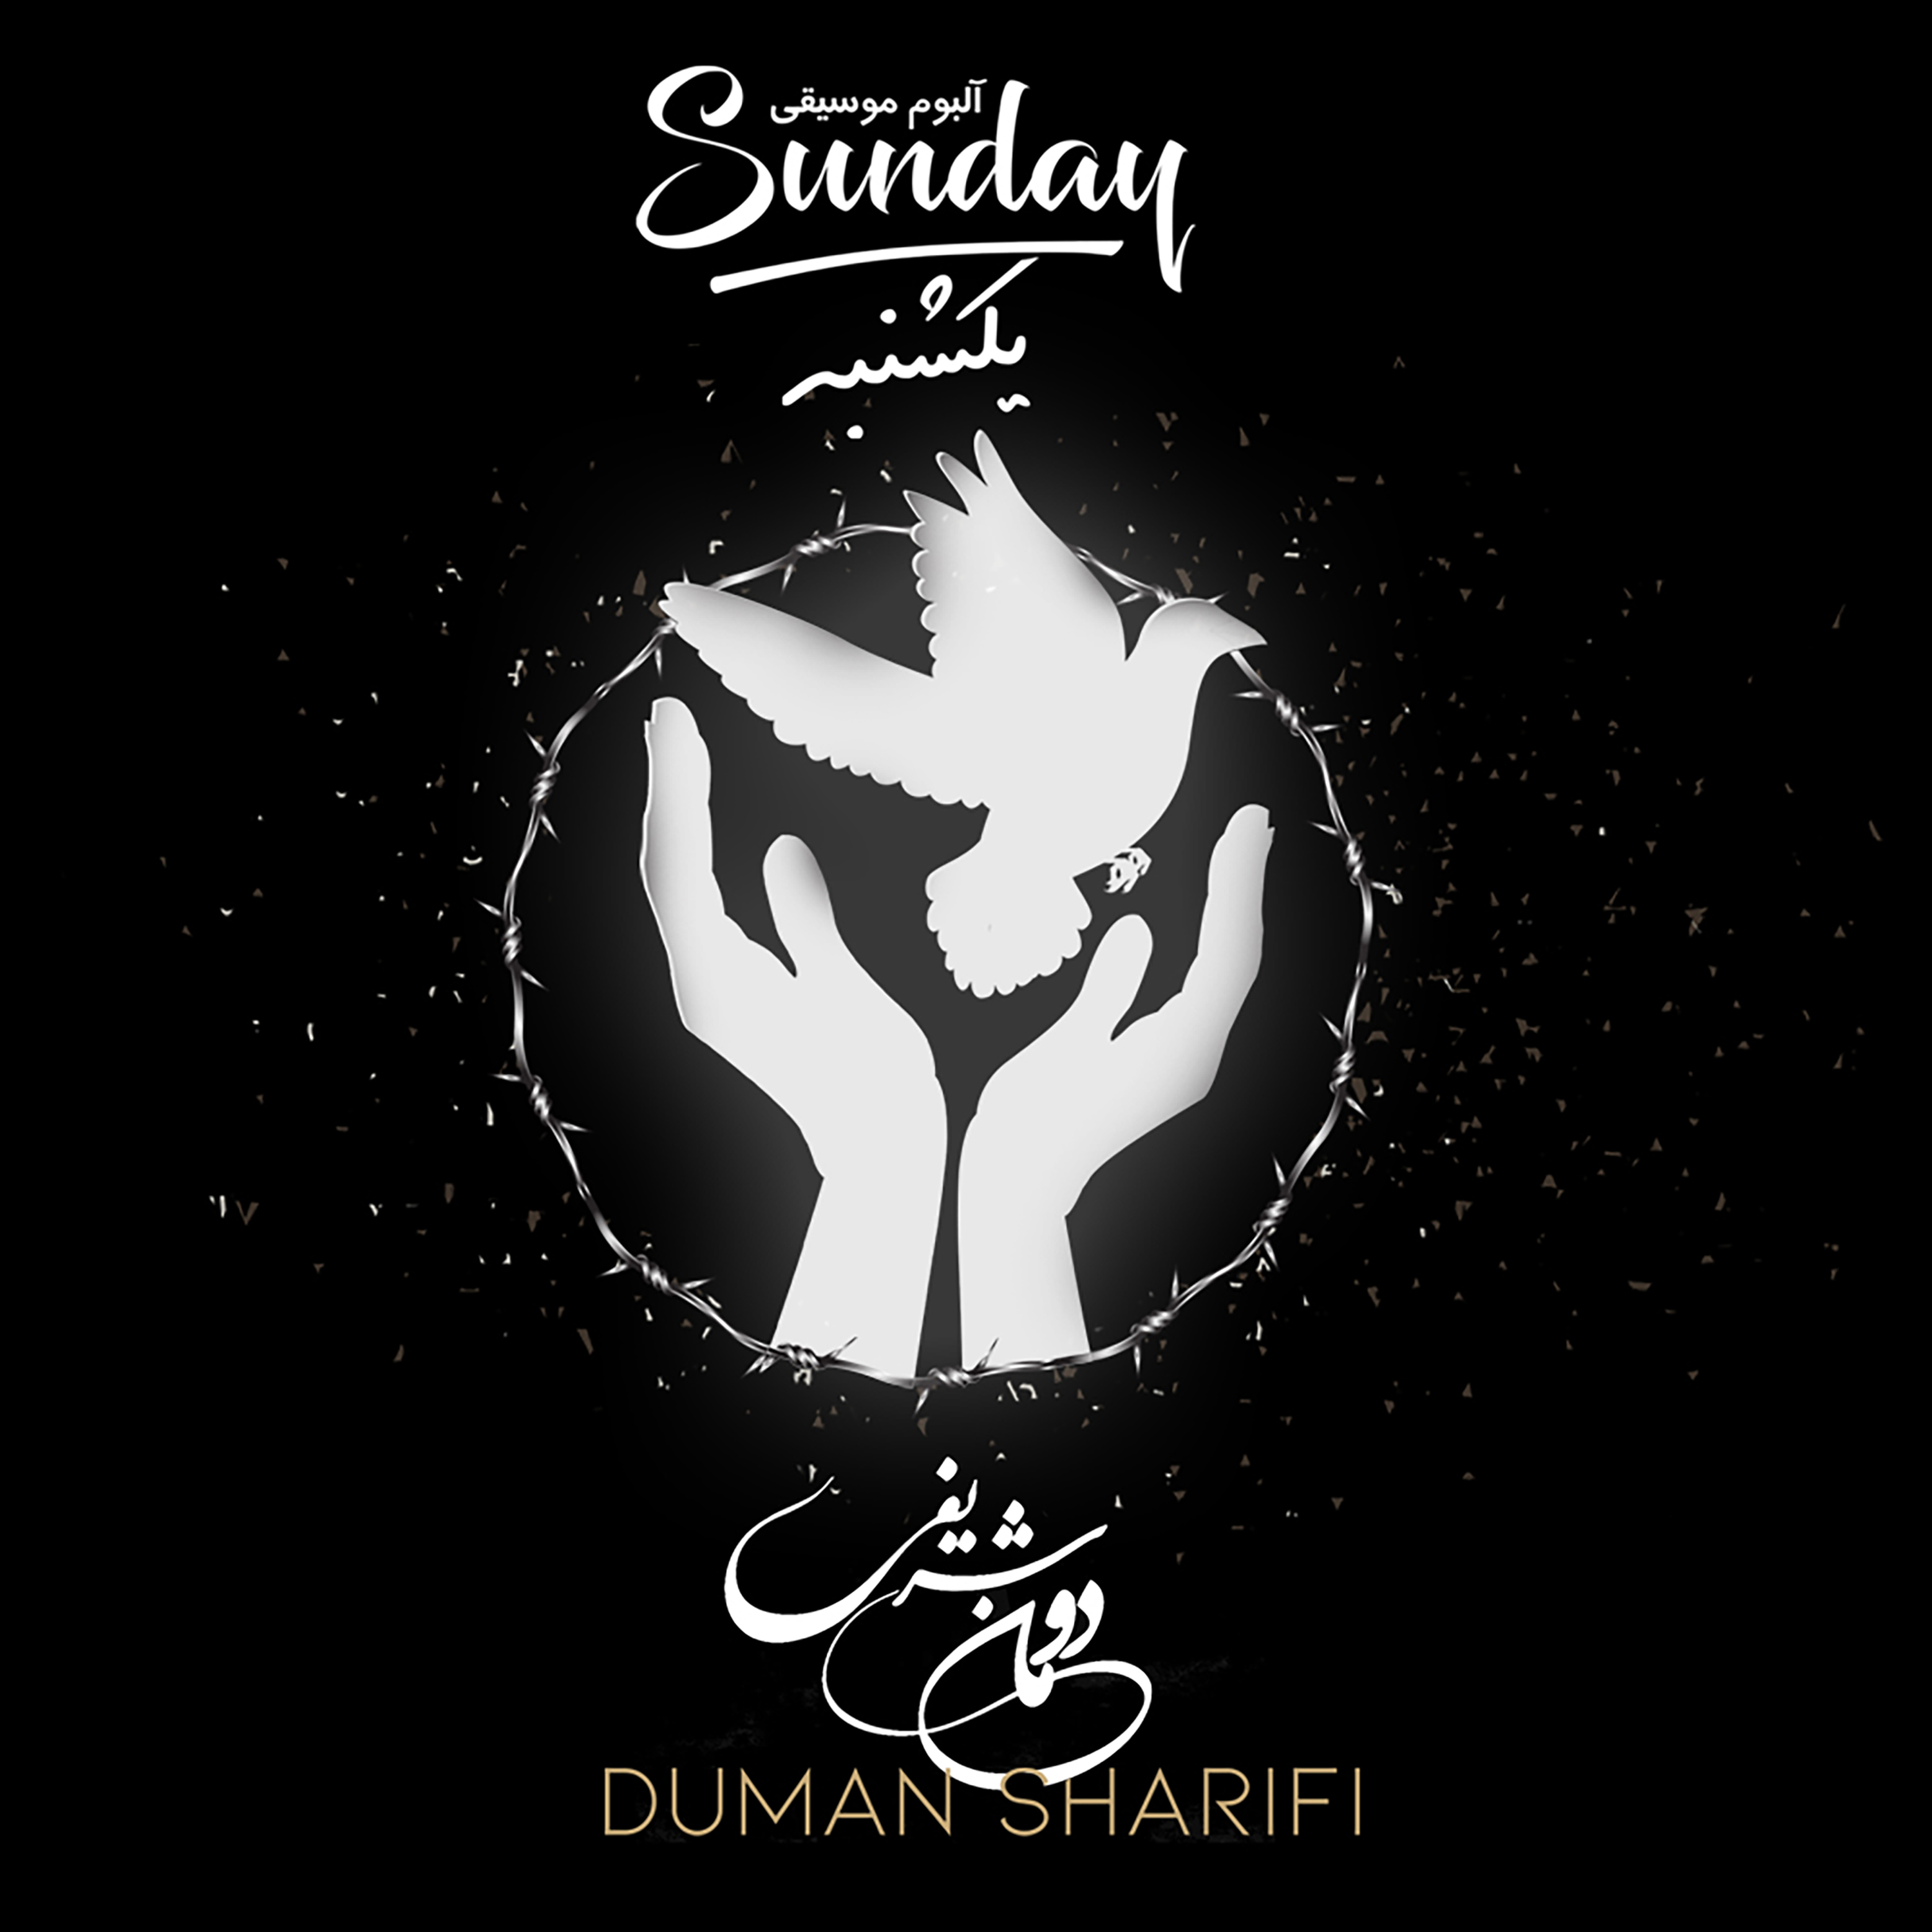  دانلود آهنگ جدید دومان شریفی - آرامش مطلق | Download New Music By Duman Sharifi - Absolute Calm